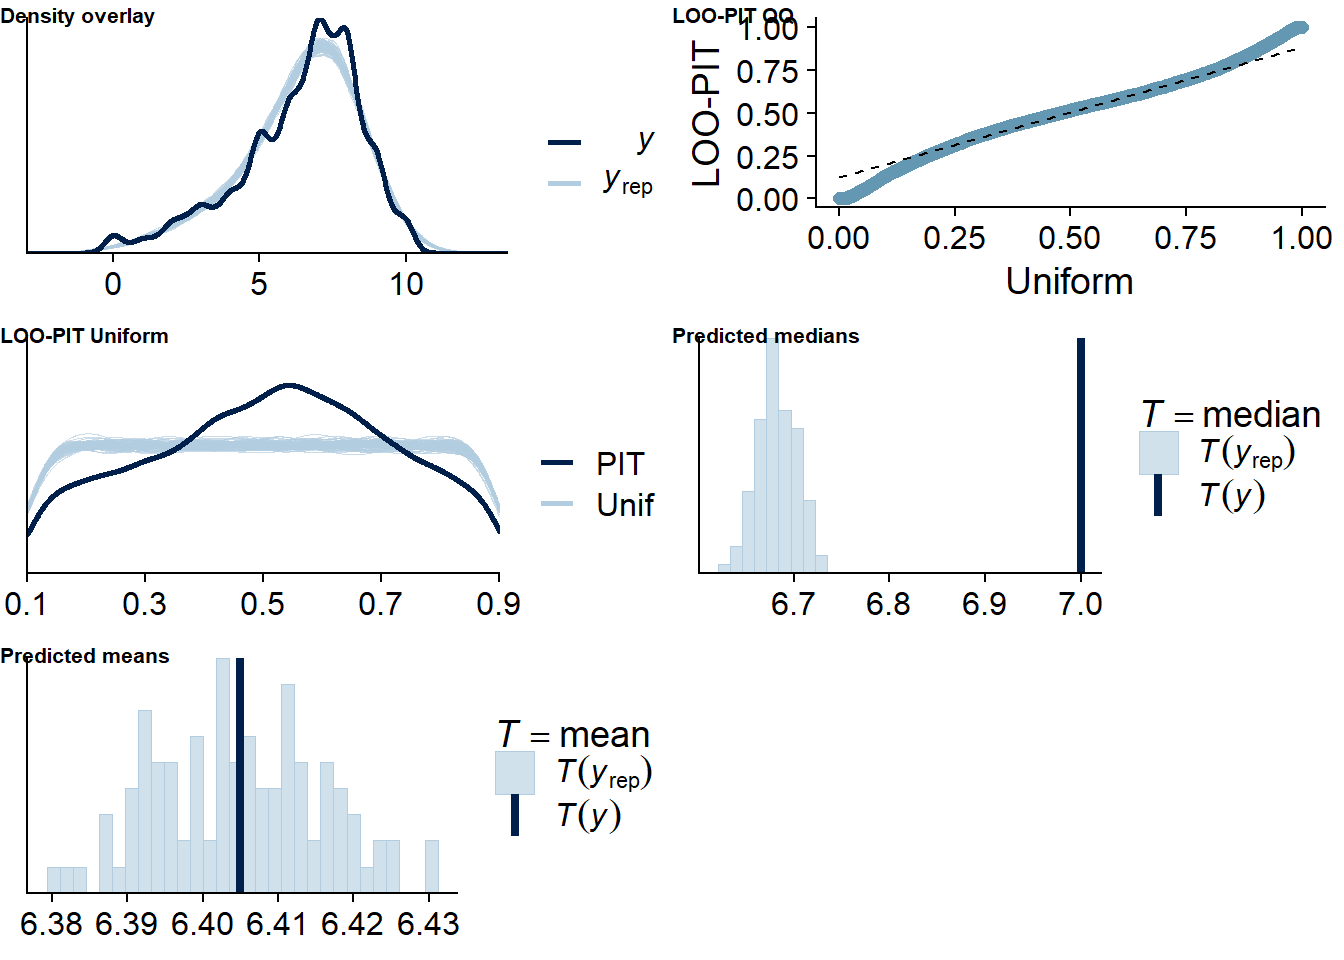 Posterior predictive checks for Music-Life Satisfaction model